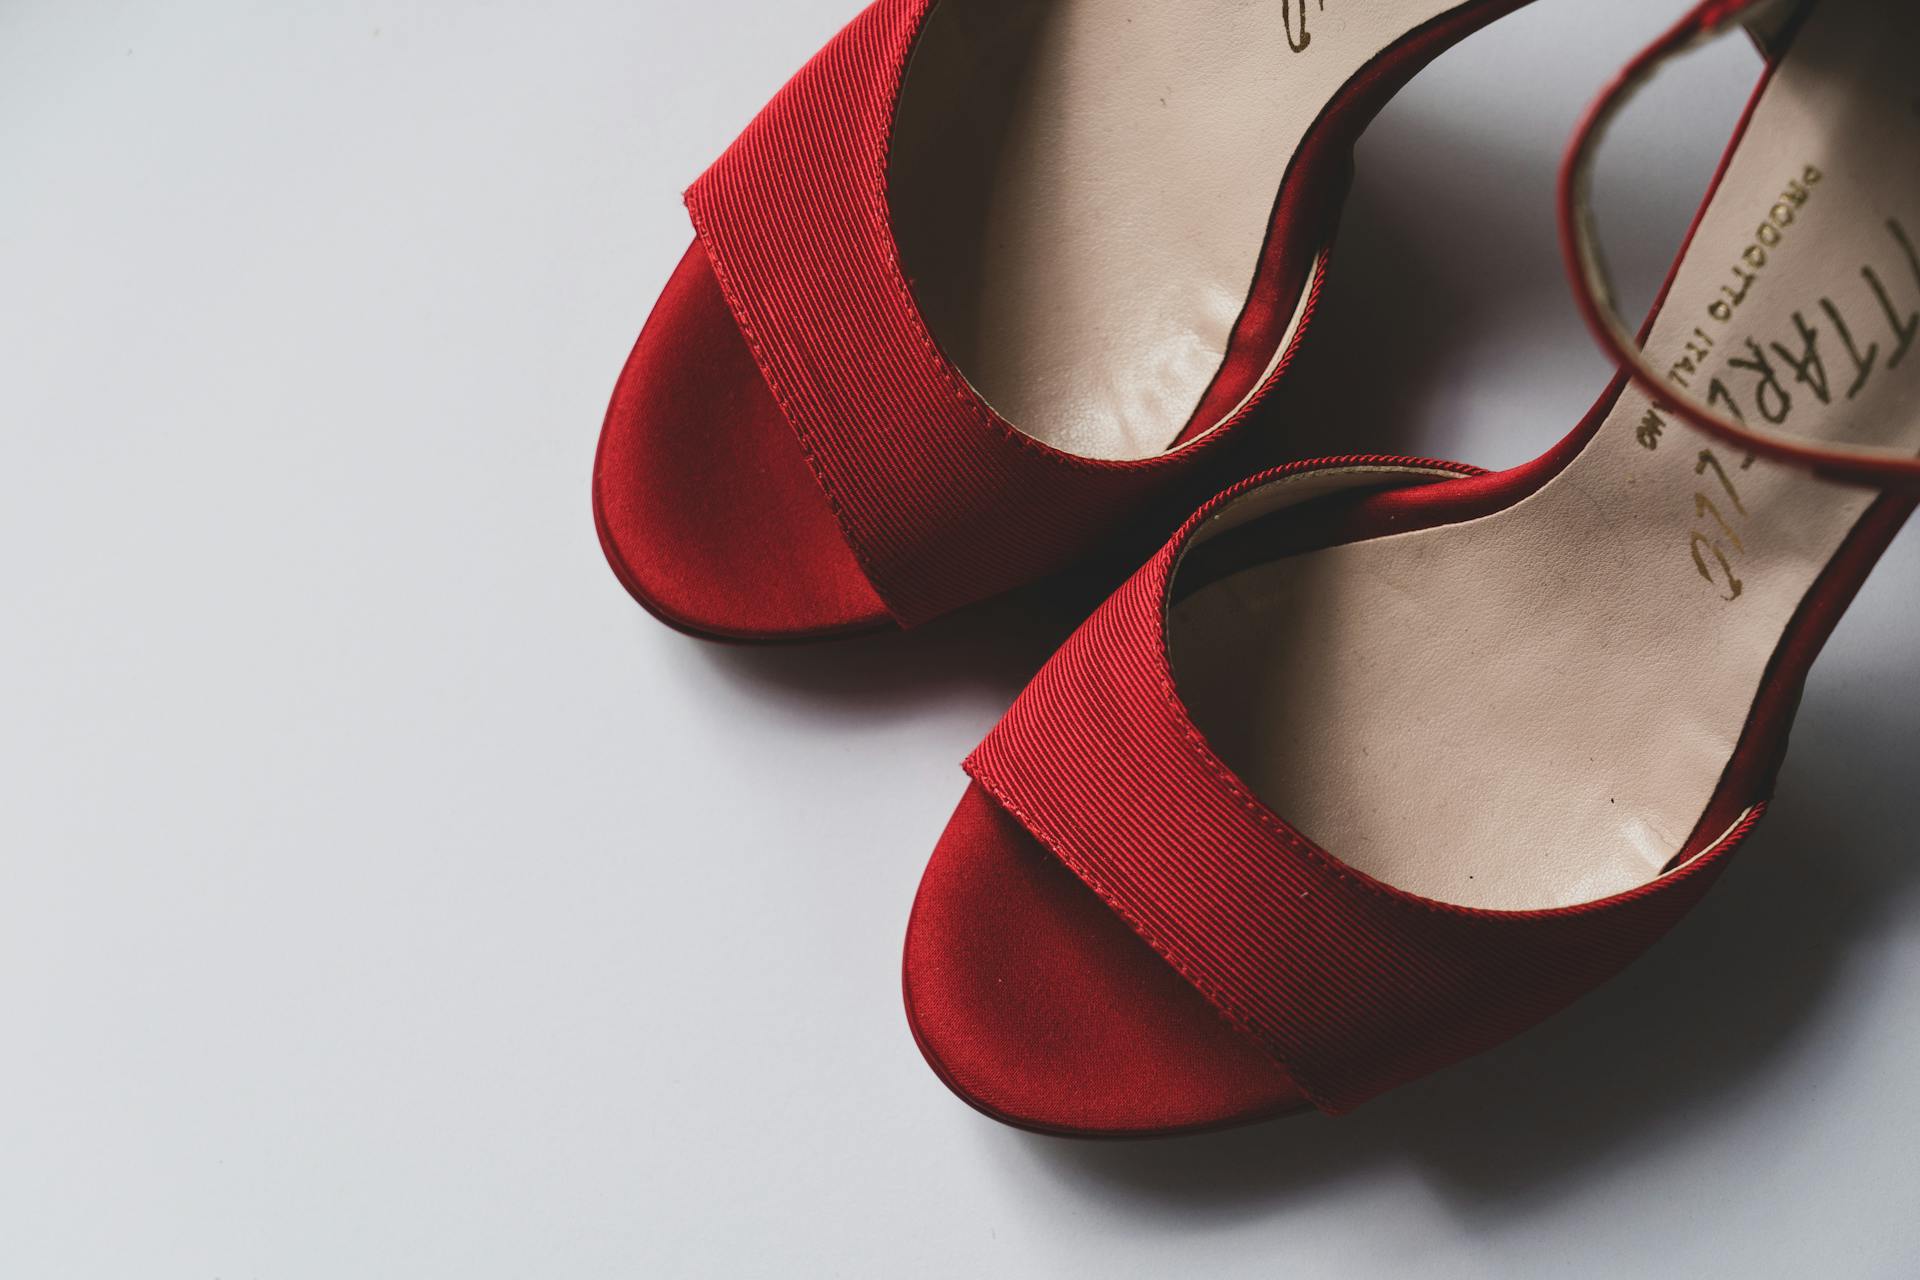 Red shoes on floor | Source: Pexels